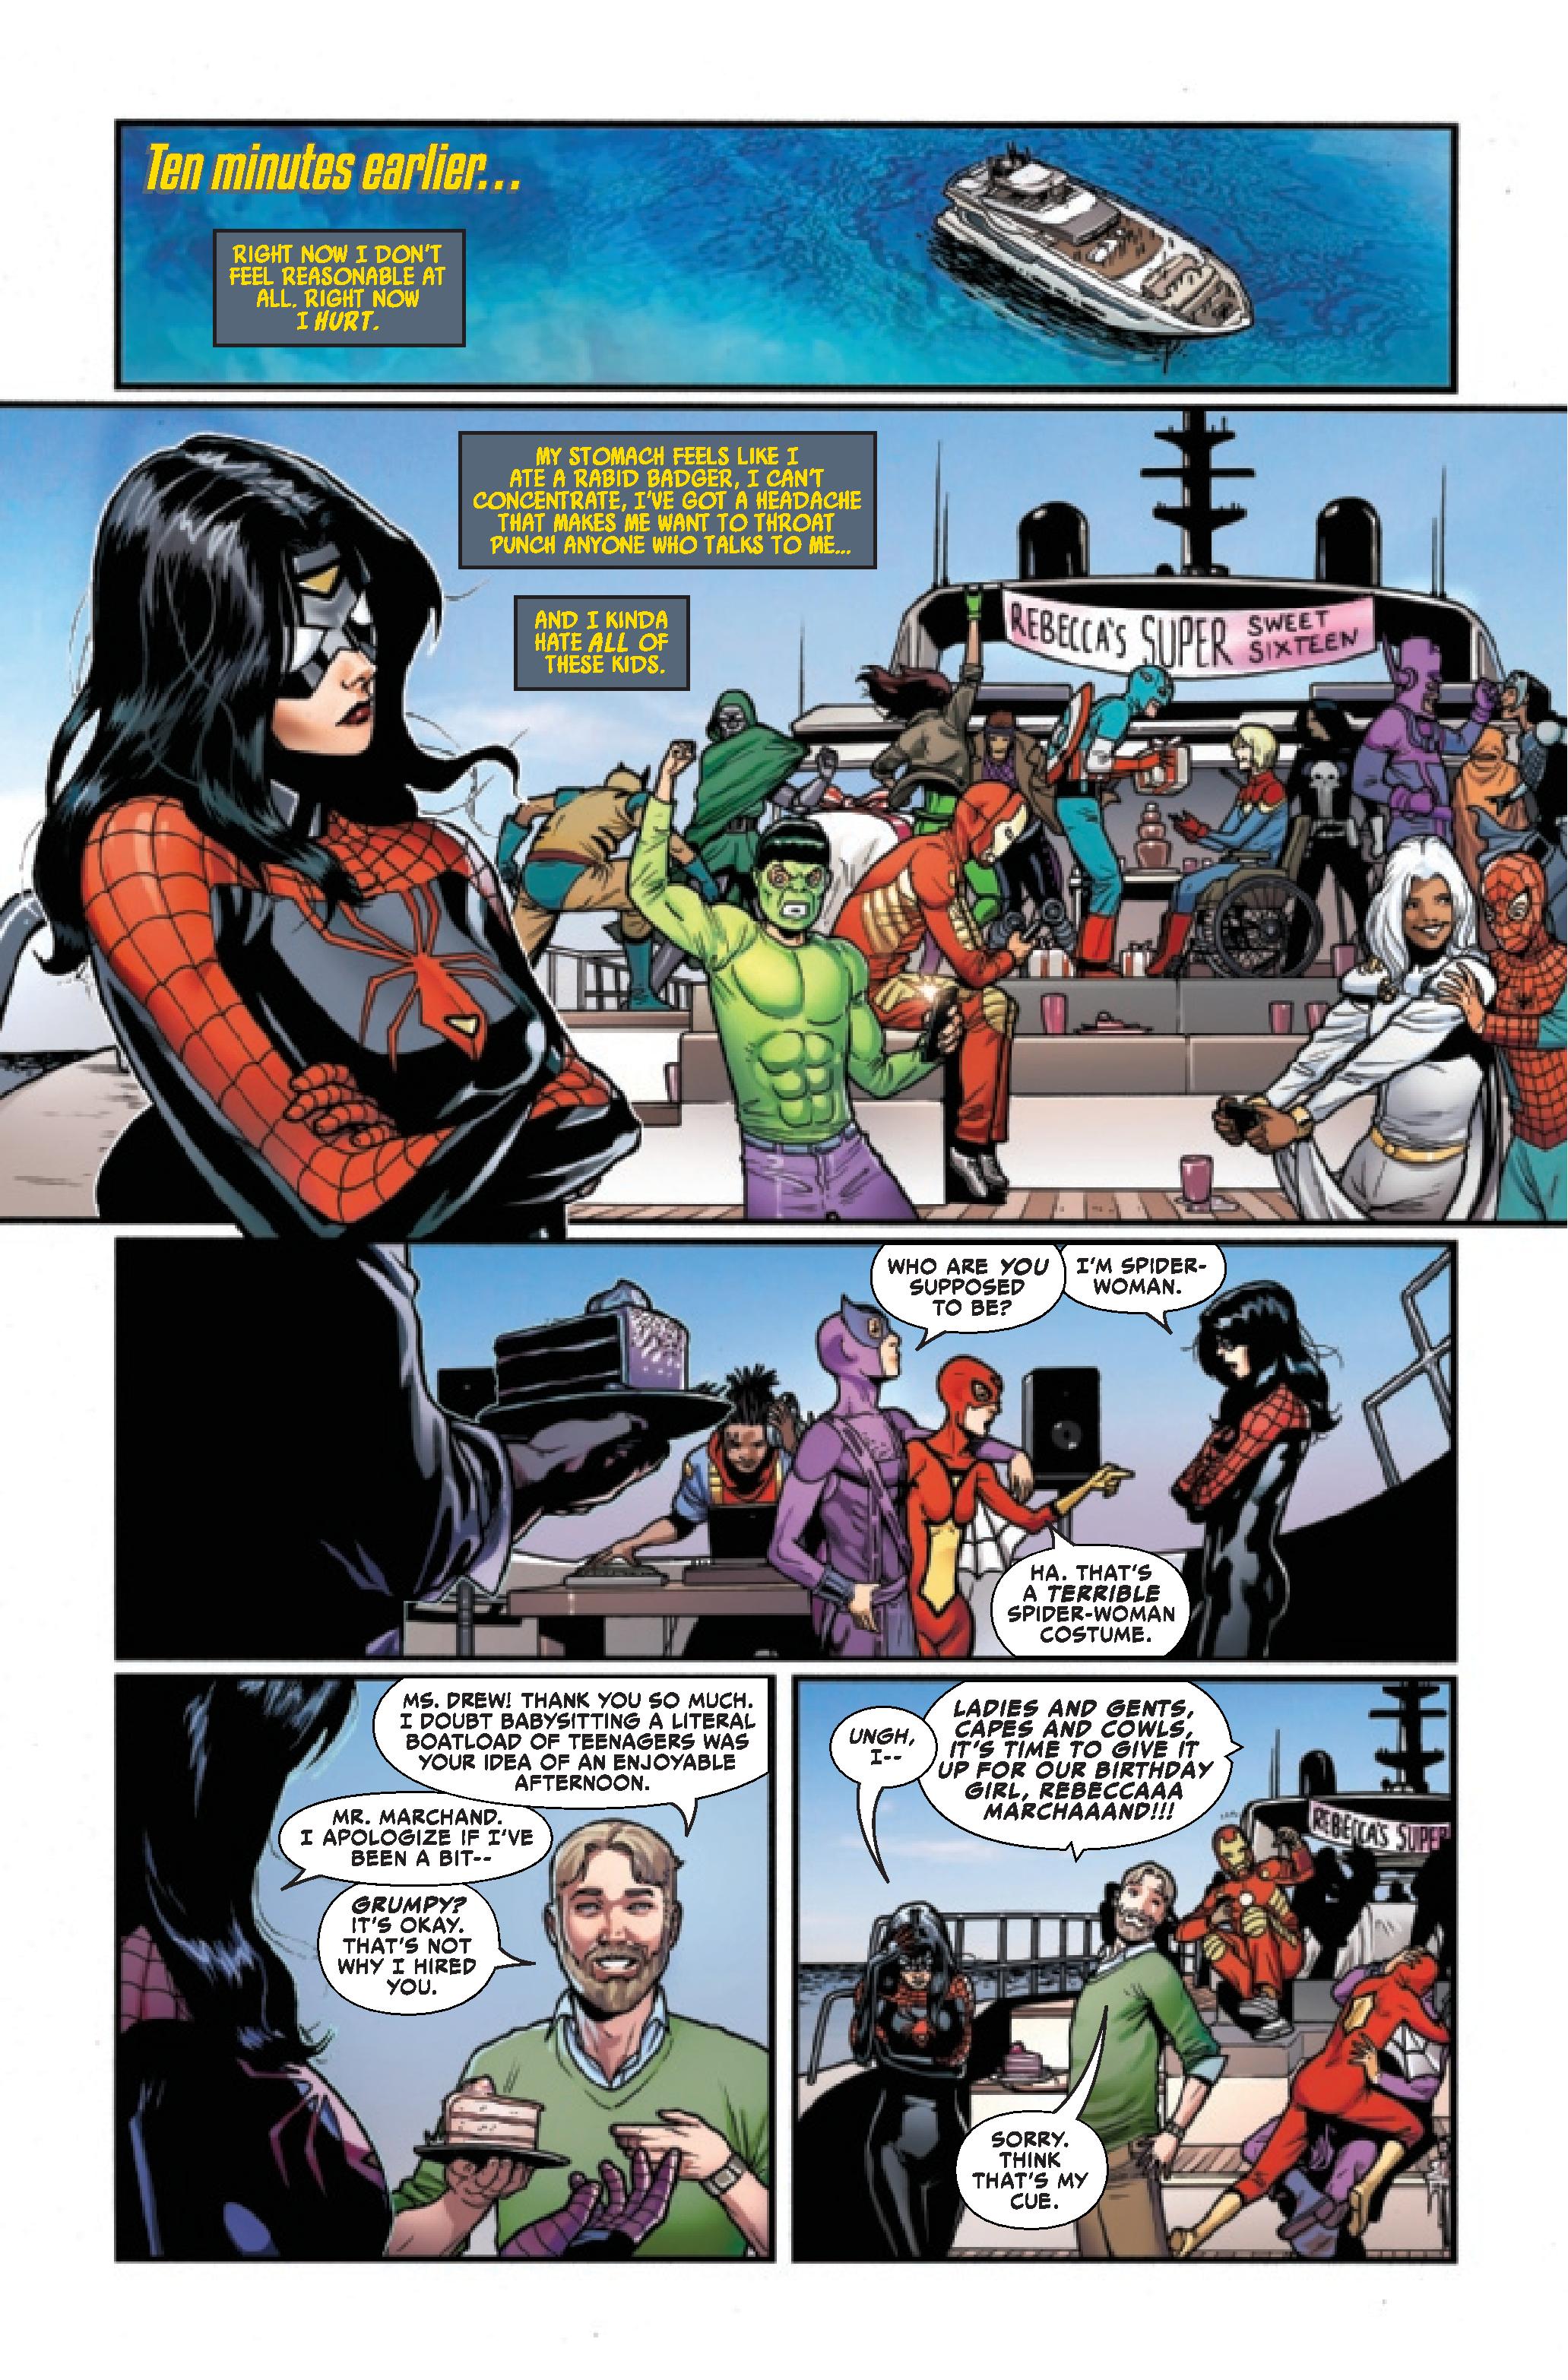 Spider-Woman #1 (2020)